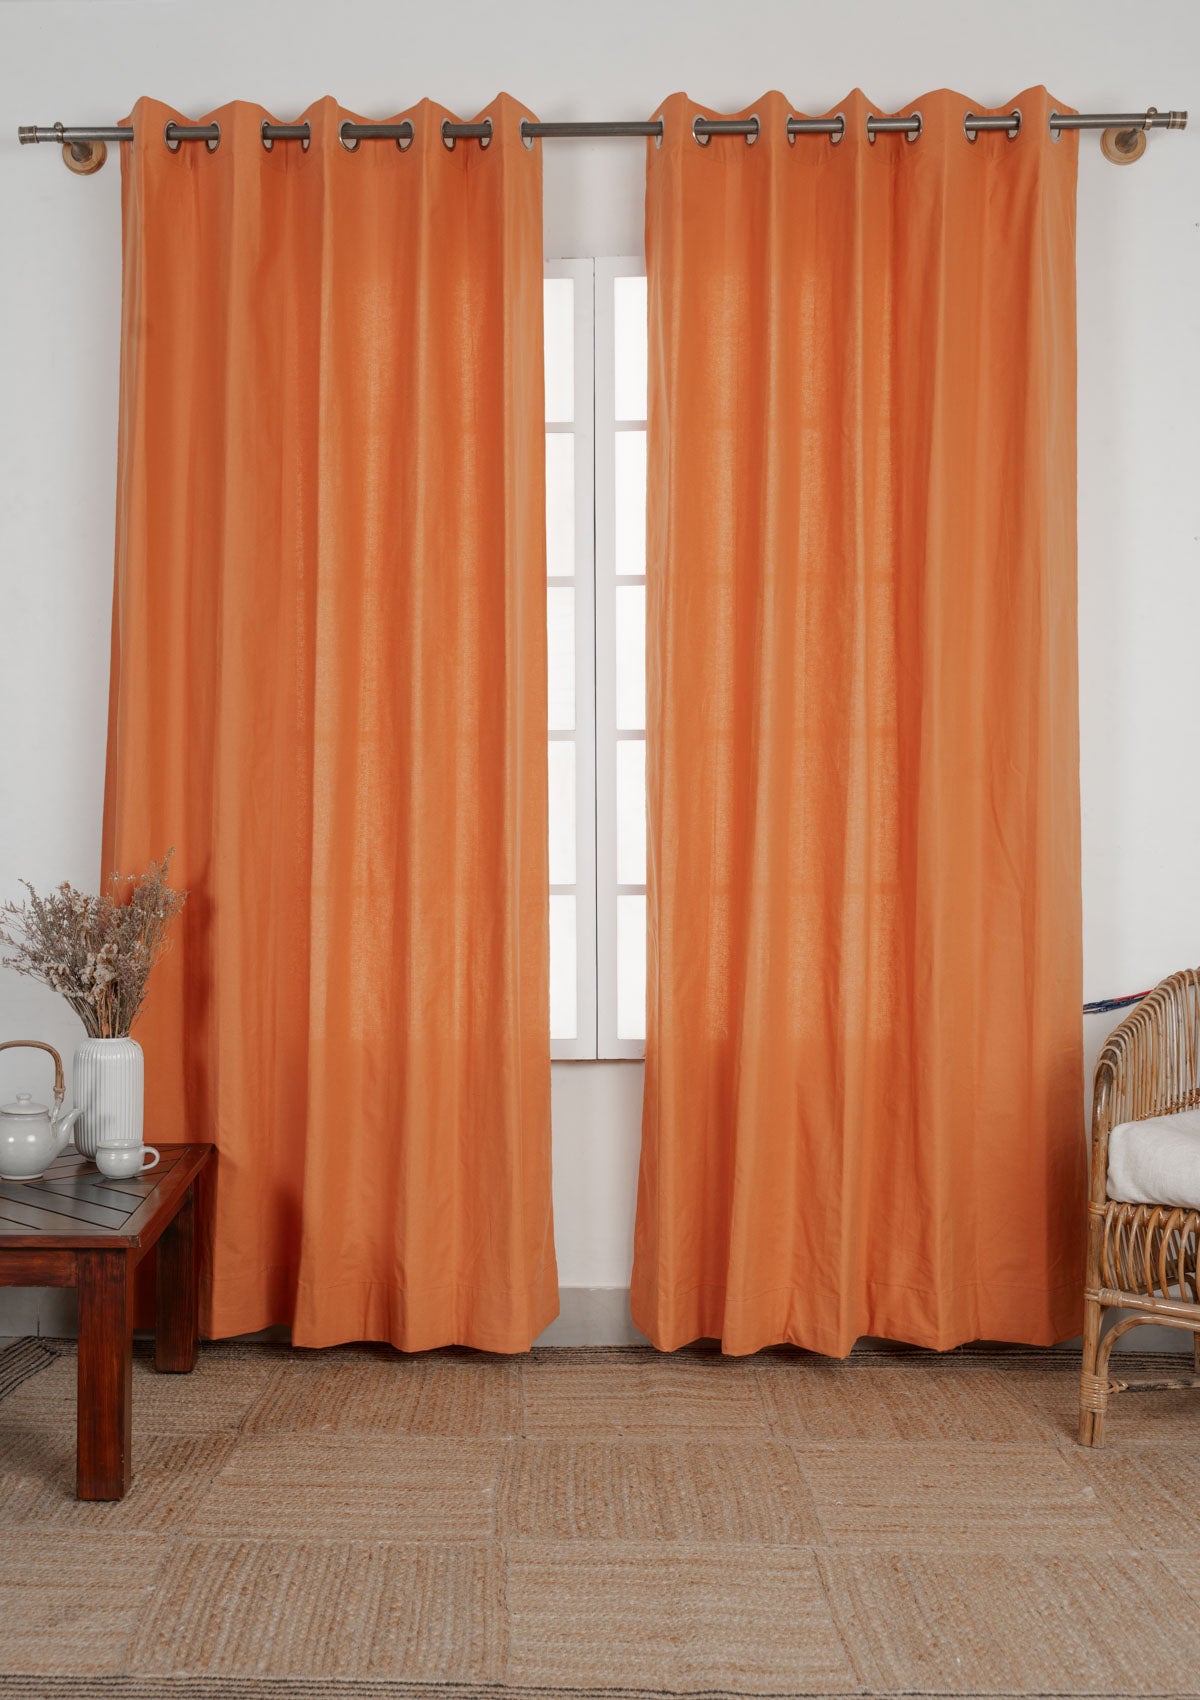 Solid orange 100% cotton plain curtain for bedroom - Room darkening - Single